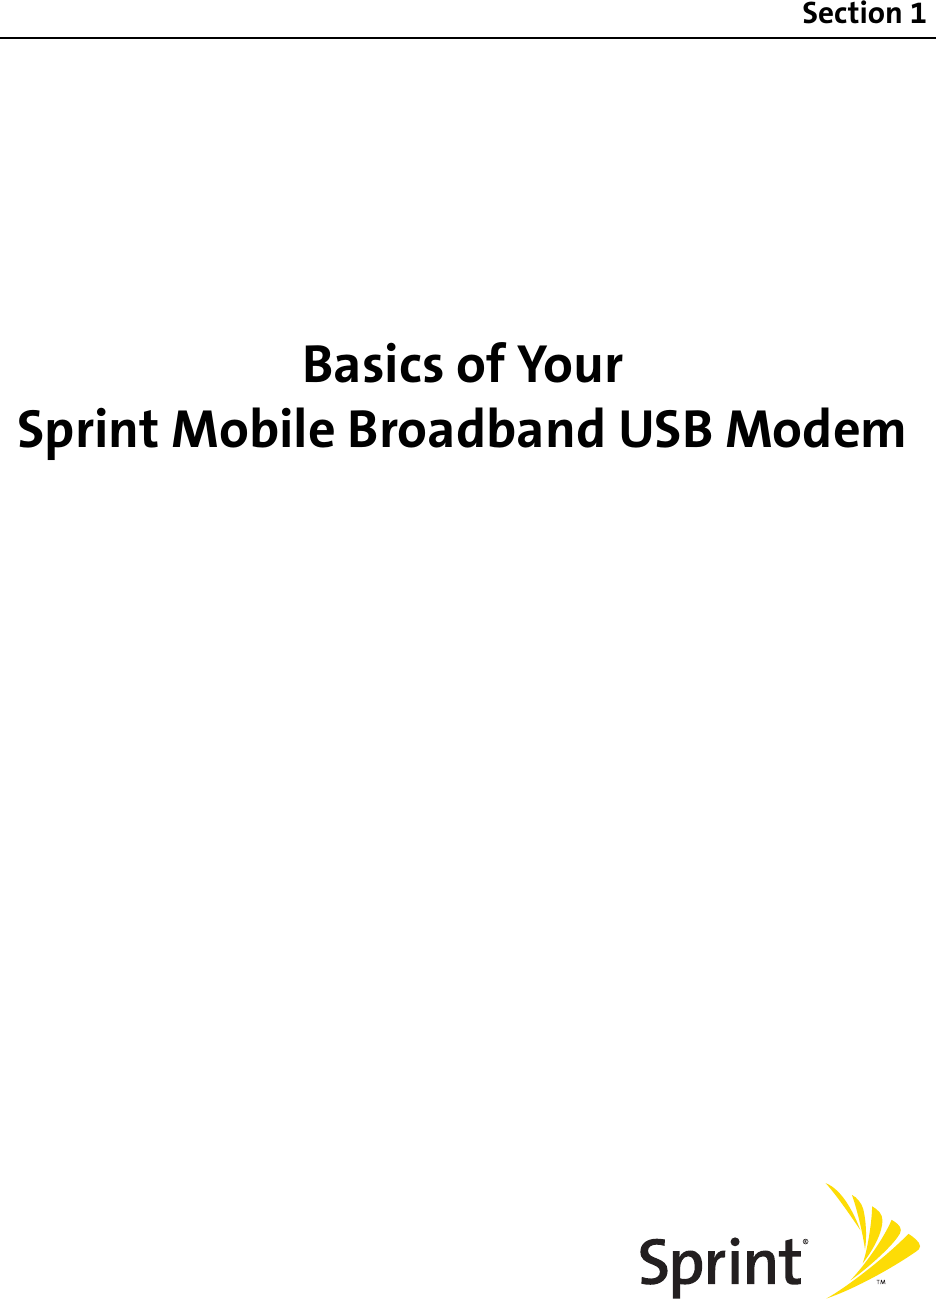 Section 1Basics of Your Sprint Mobile Broadband USB Modem